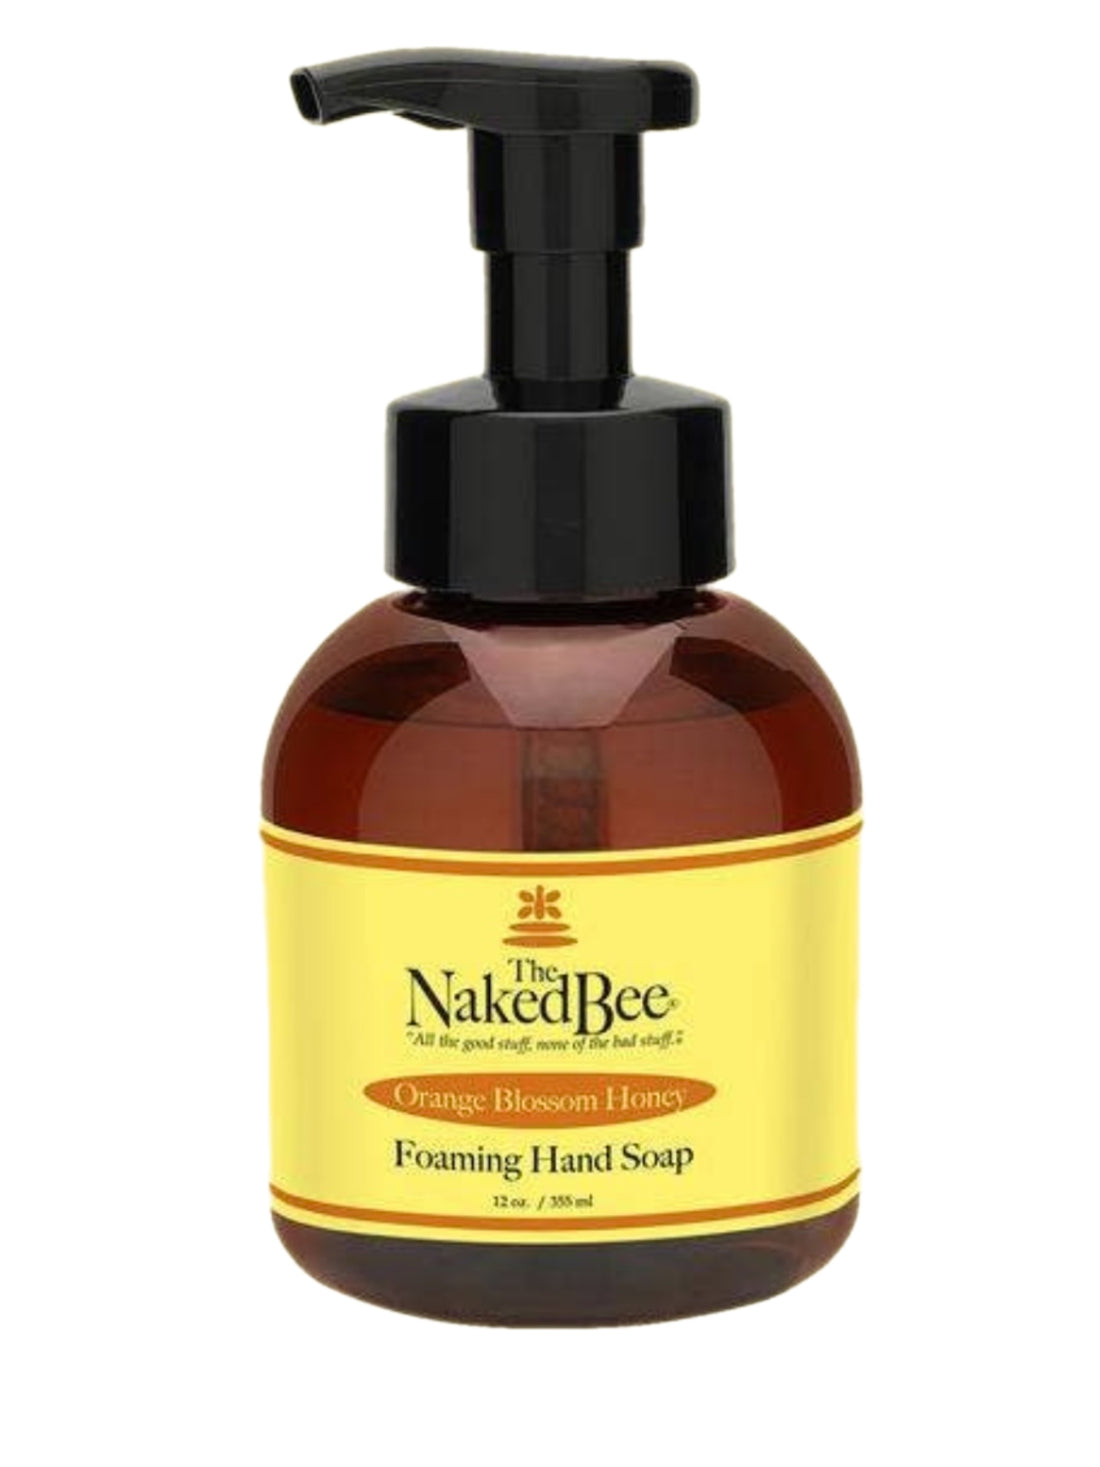 Naked Bee Foaming Hand Soap - Orange Blossom Honey